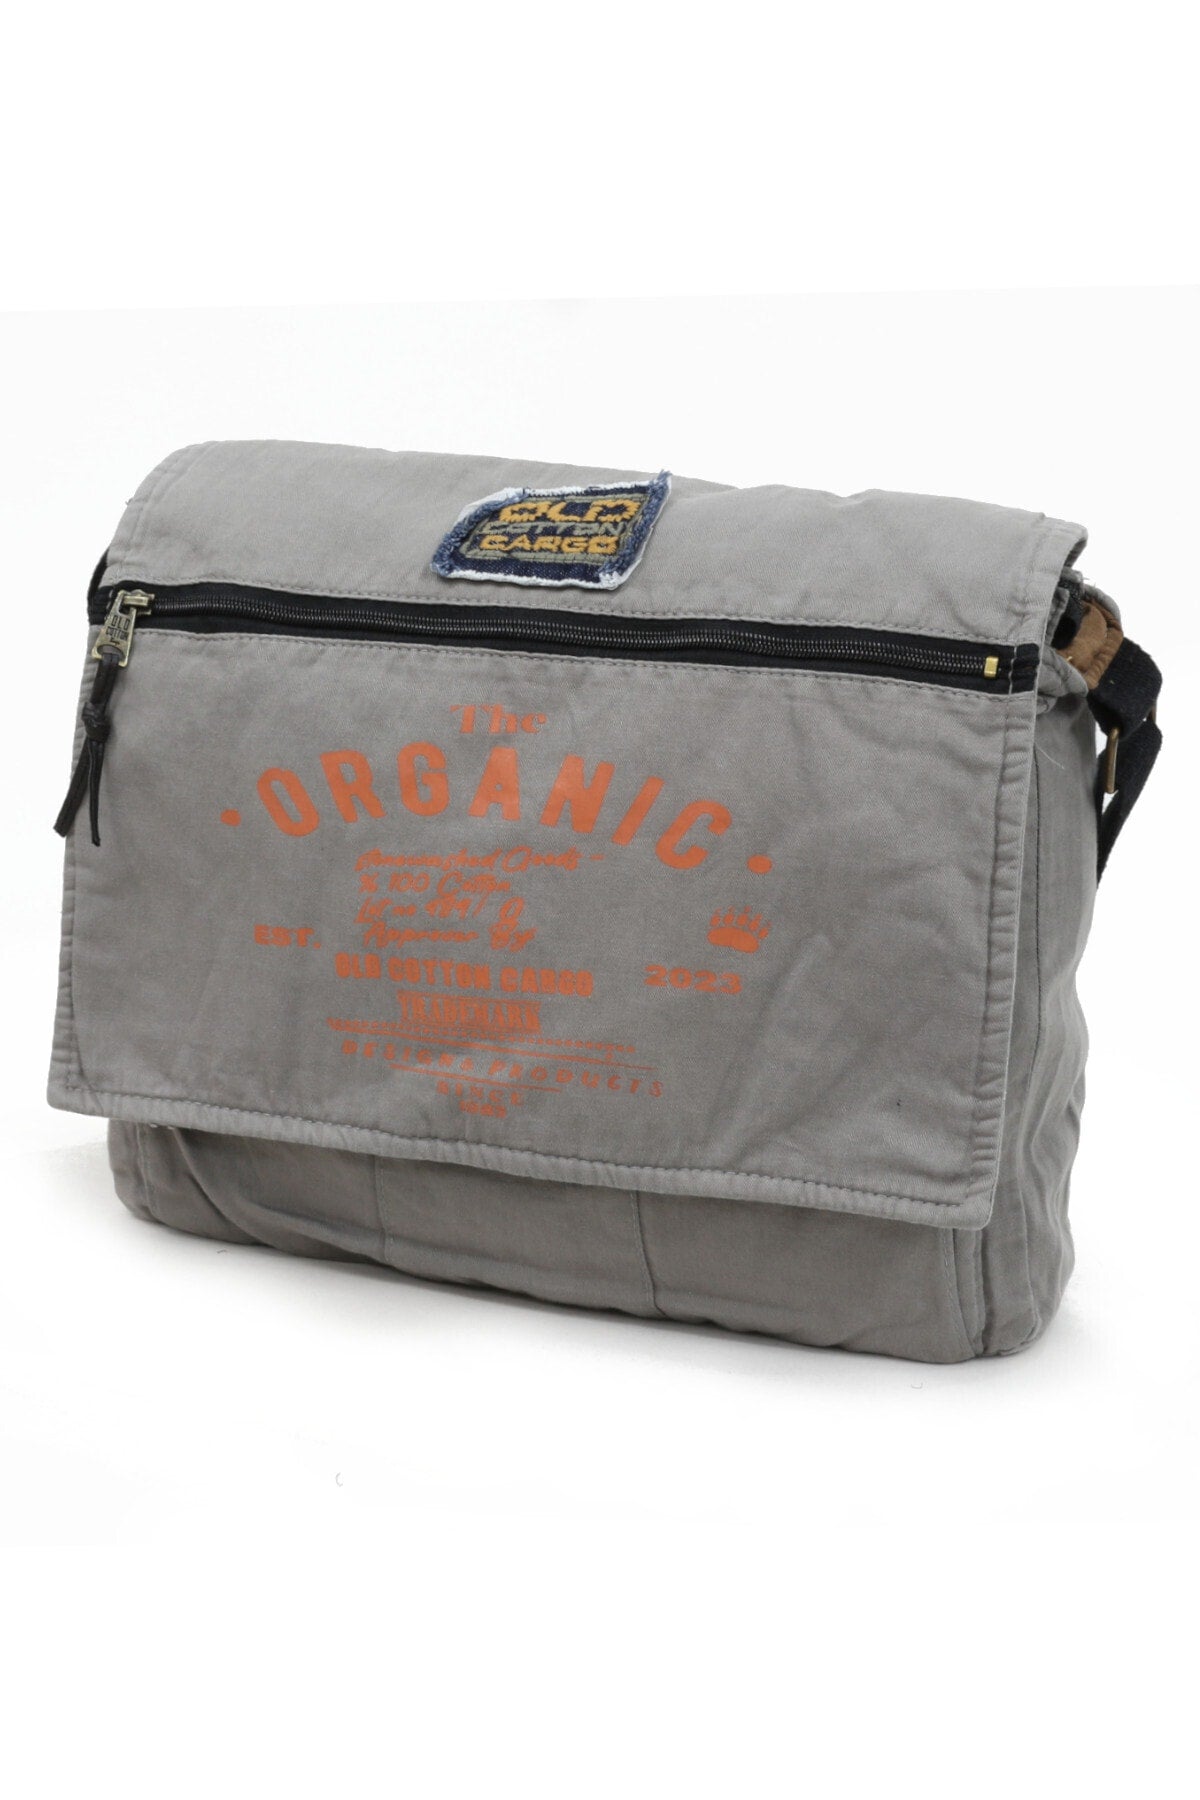 Old Cotton Gray Loose Canvas Shoulder Messenger Laptop School Travel Daily Vintage Cotton Fabric Bag